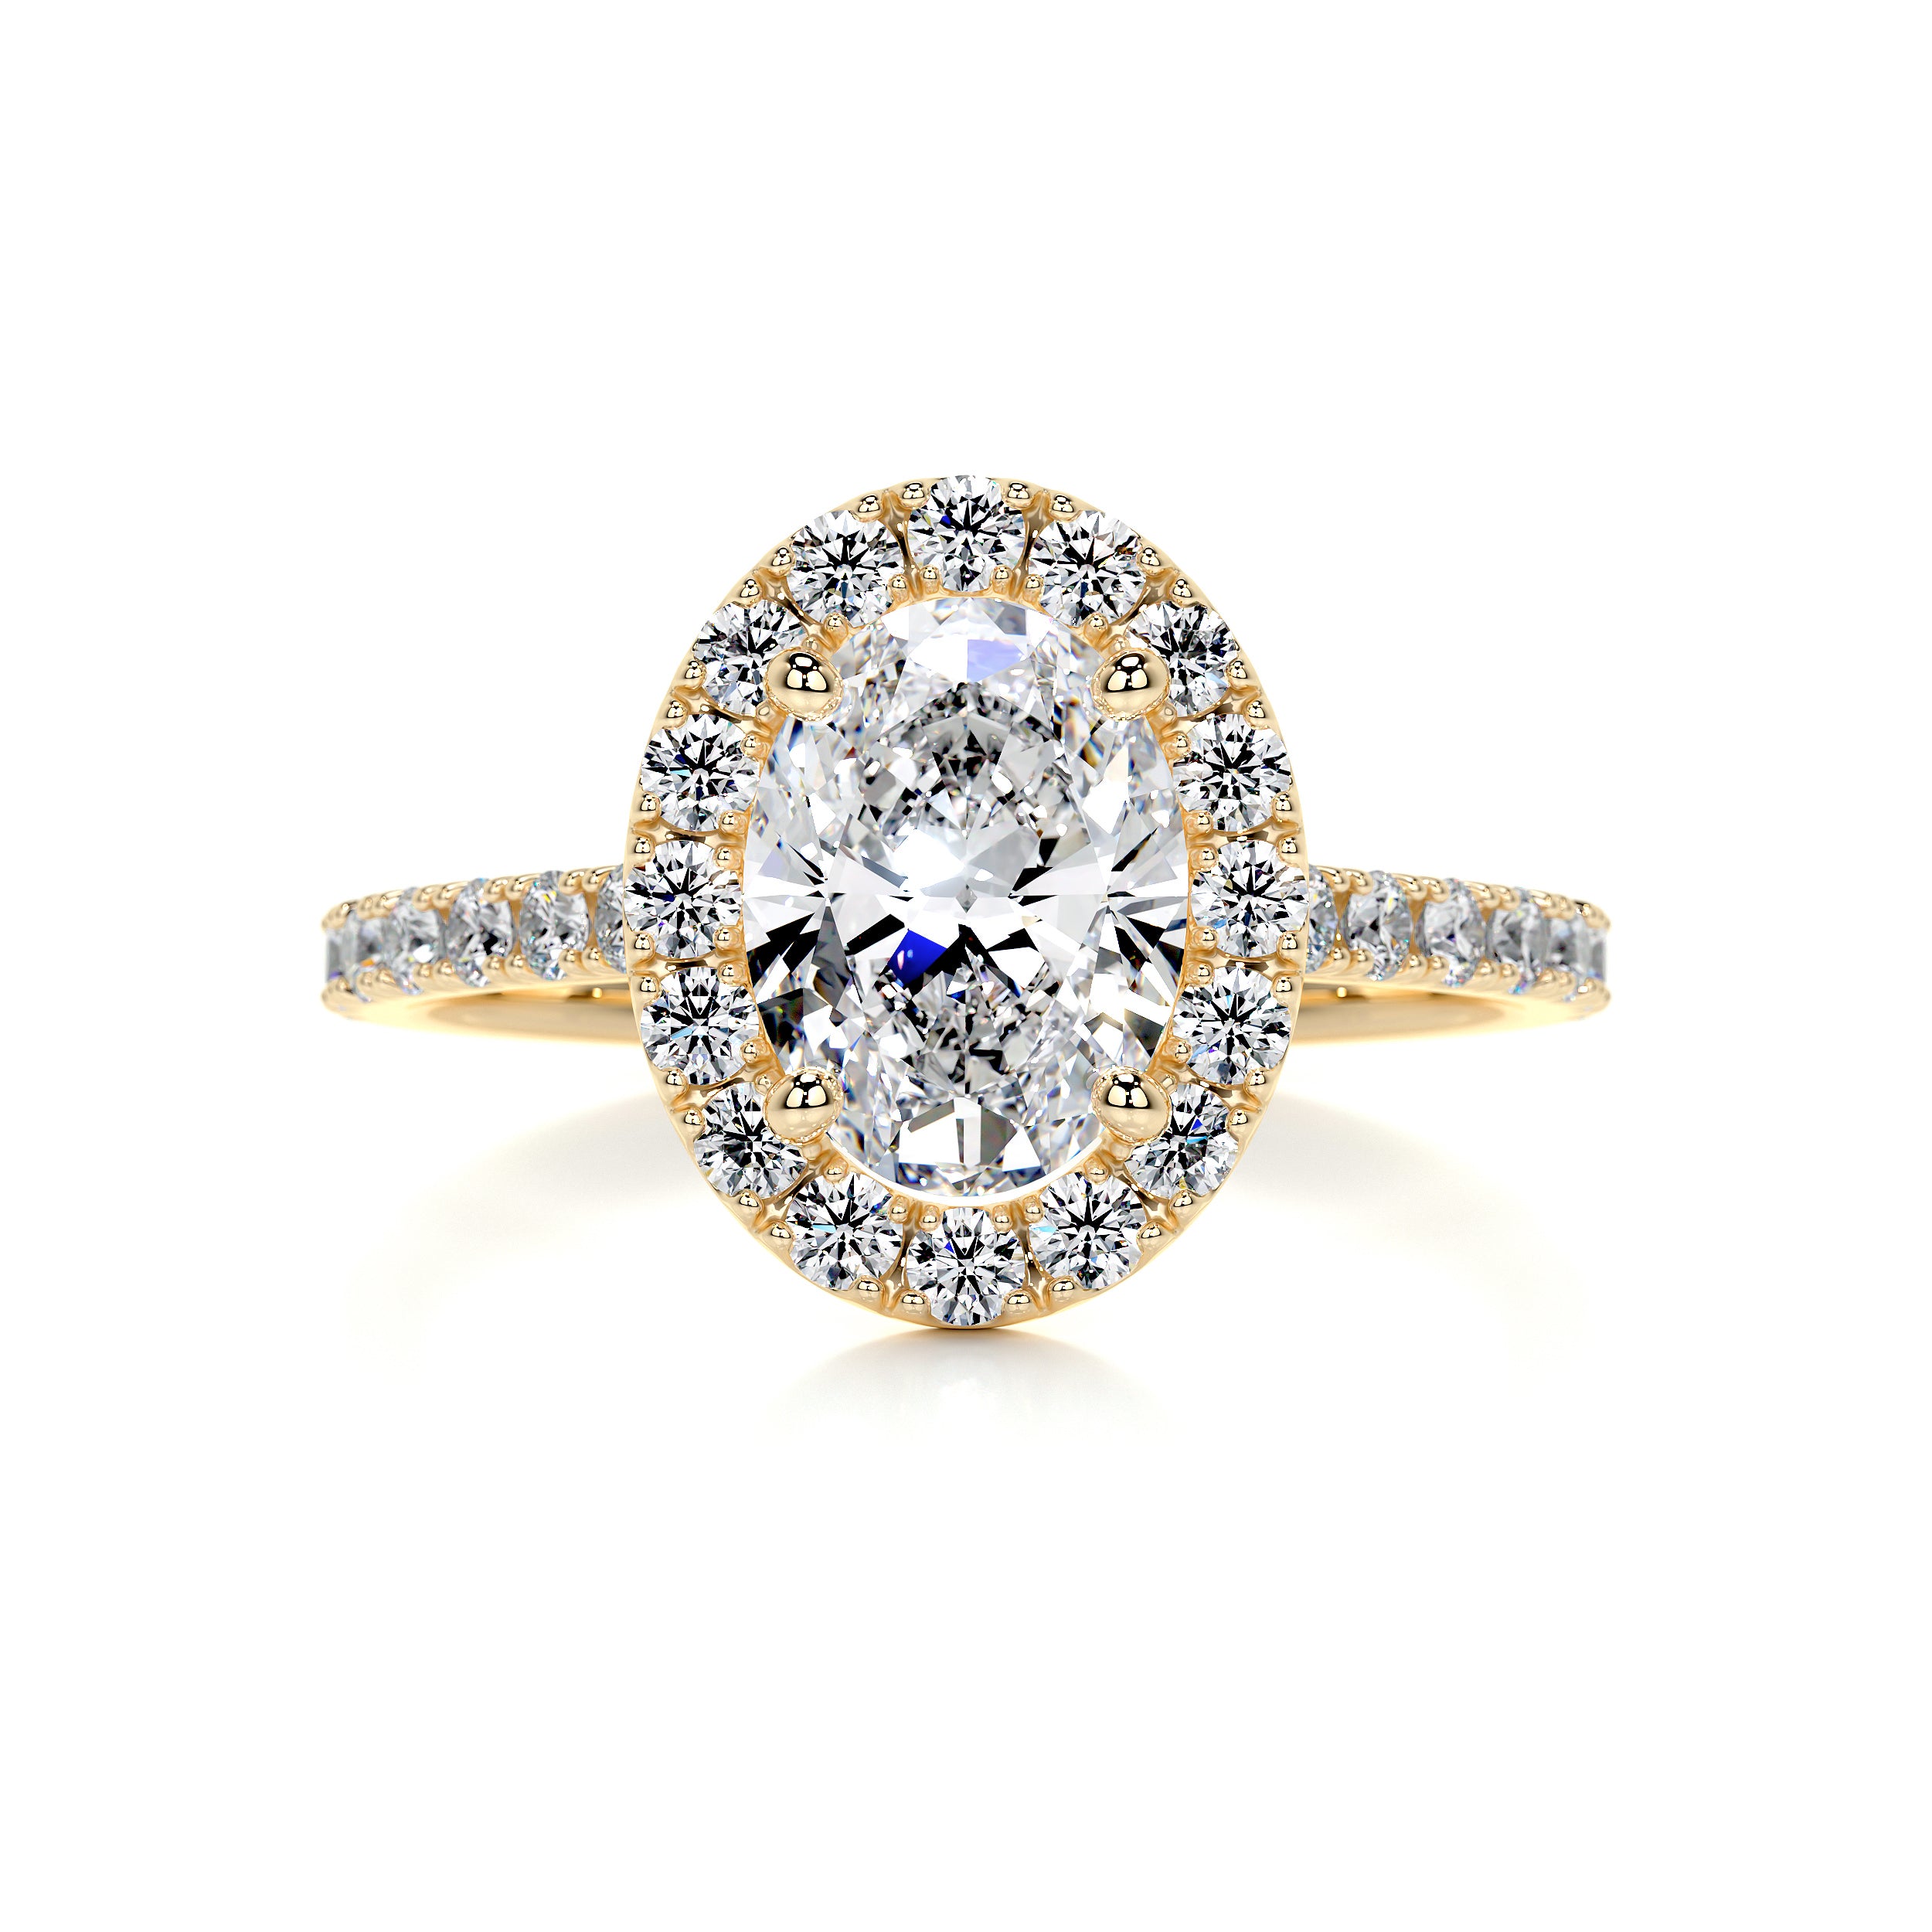 Maria Diamond Engagement Ring - 18K Yellow Gold